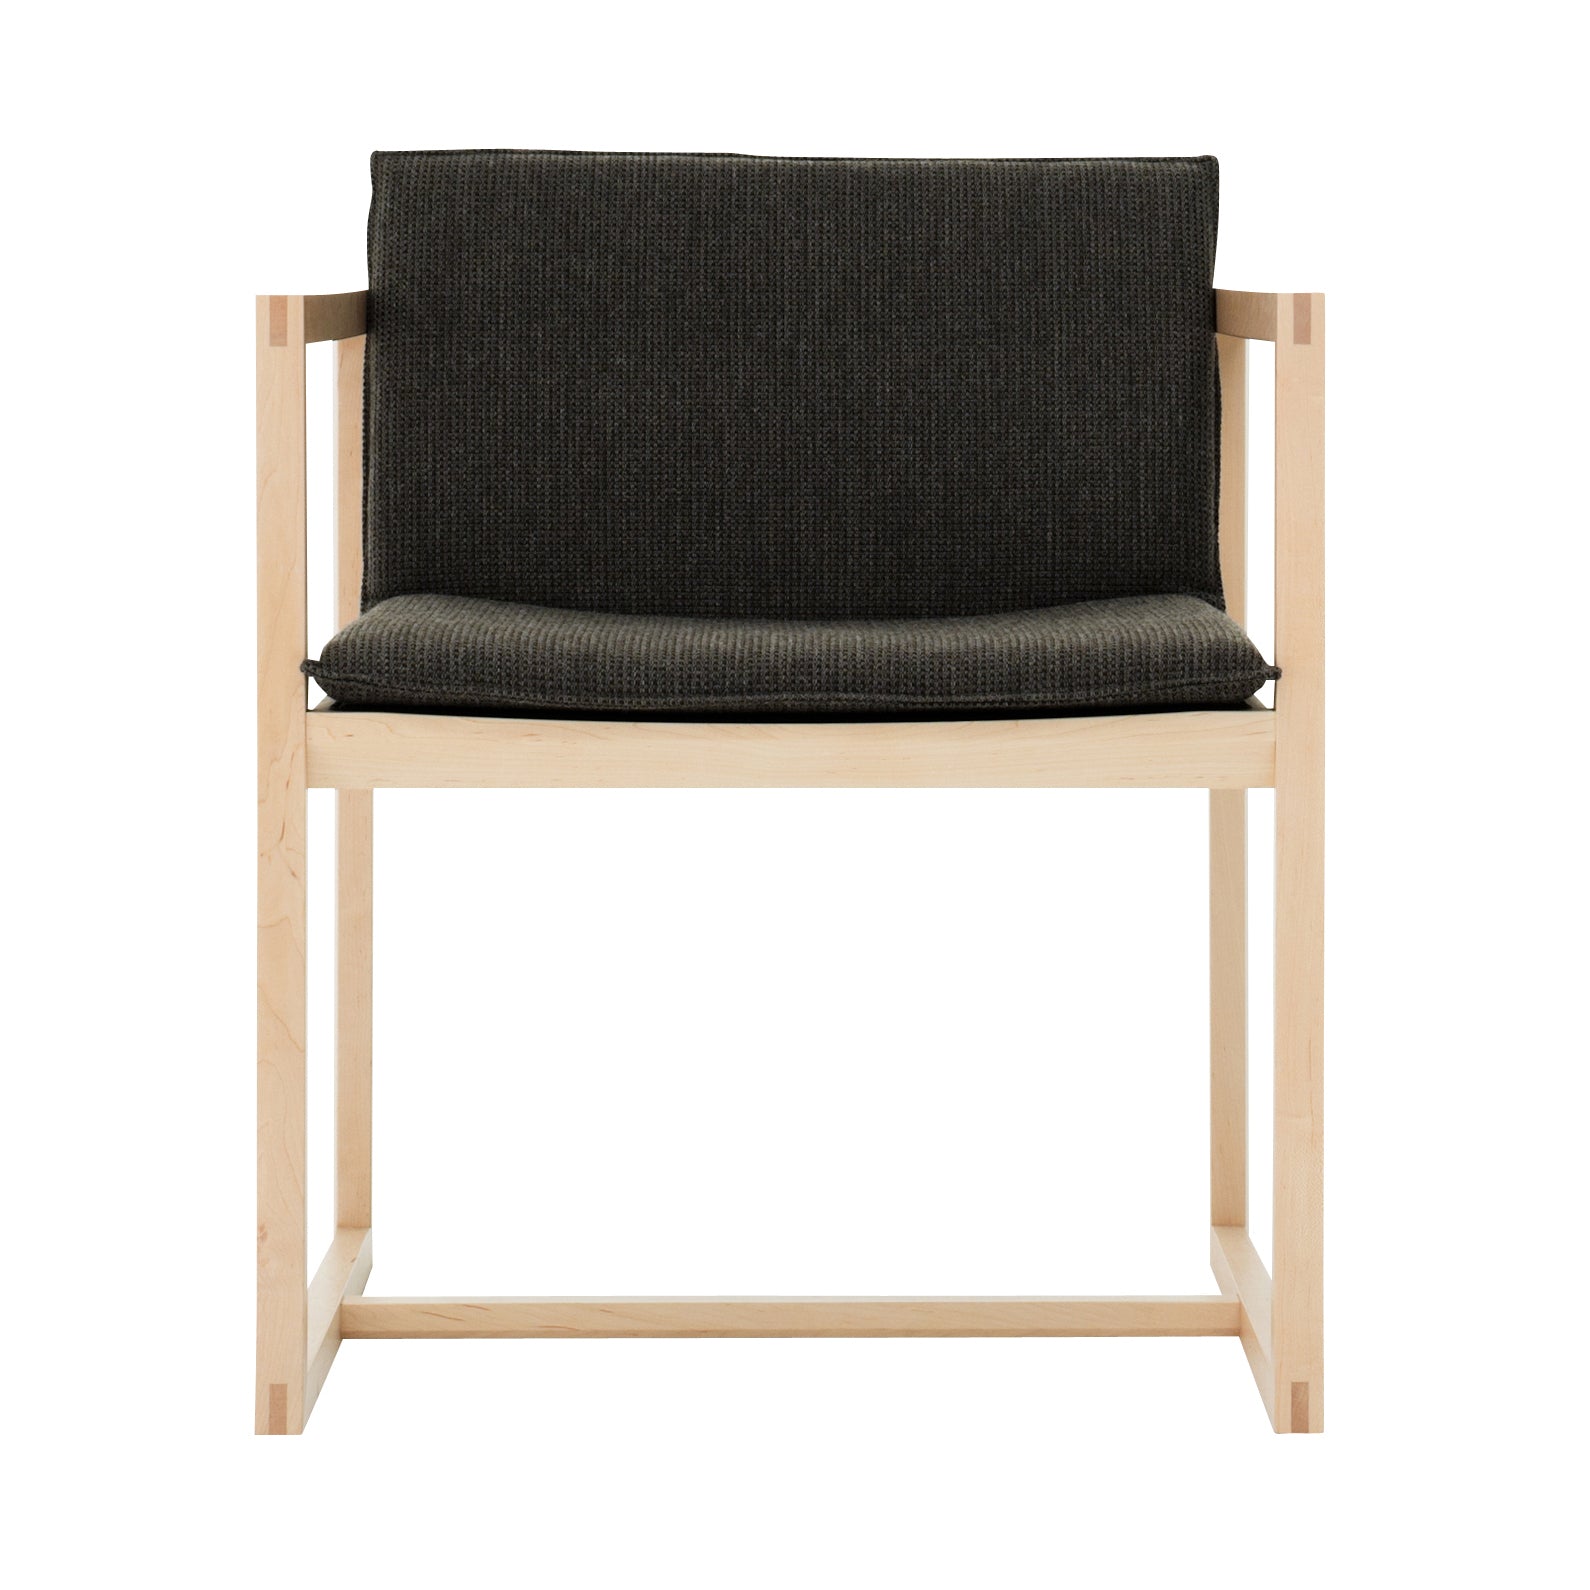 Ren Chair: Pure Oak + Black Leather